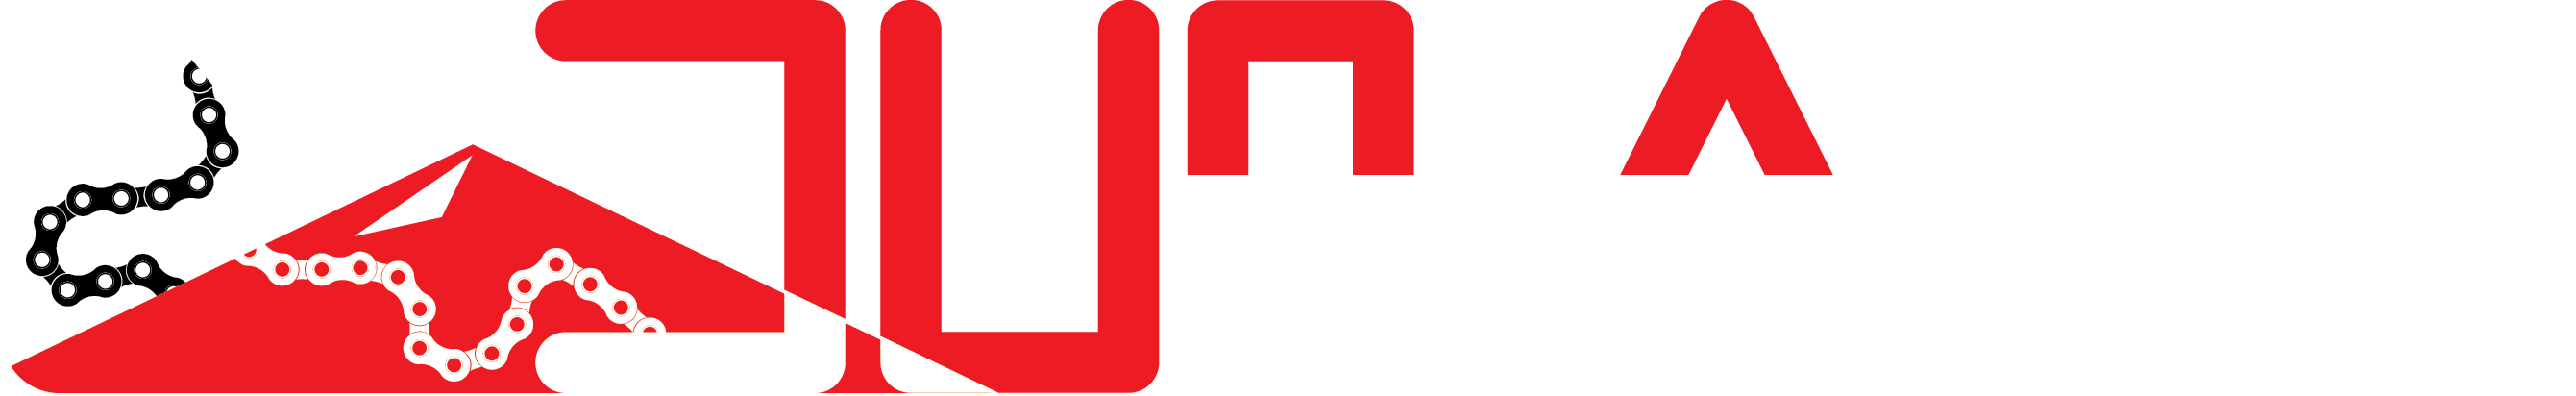 jurace logo